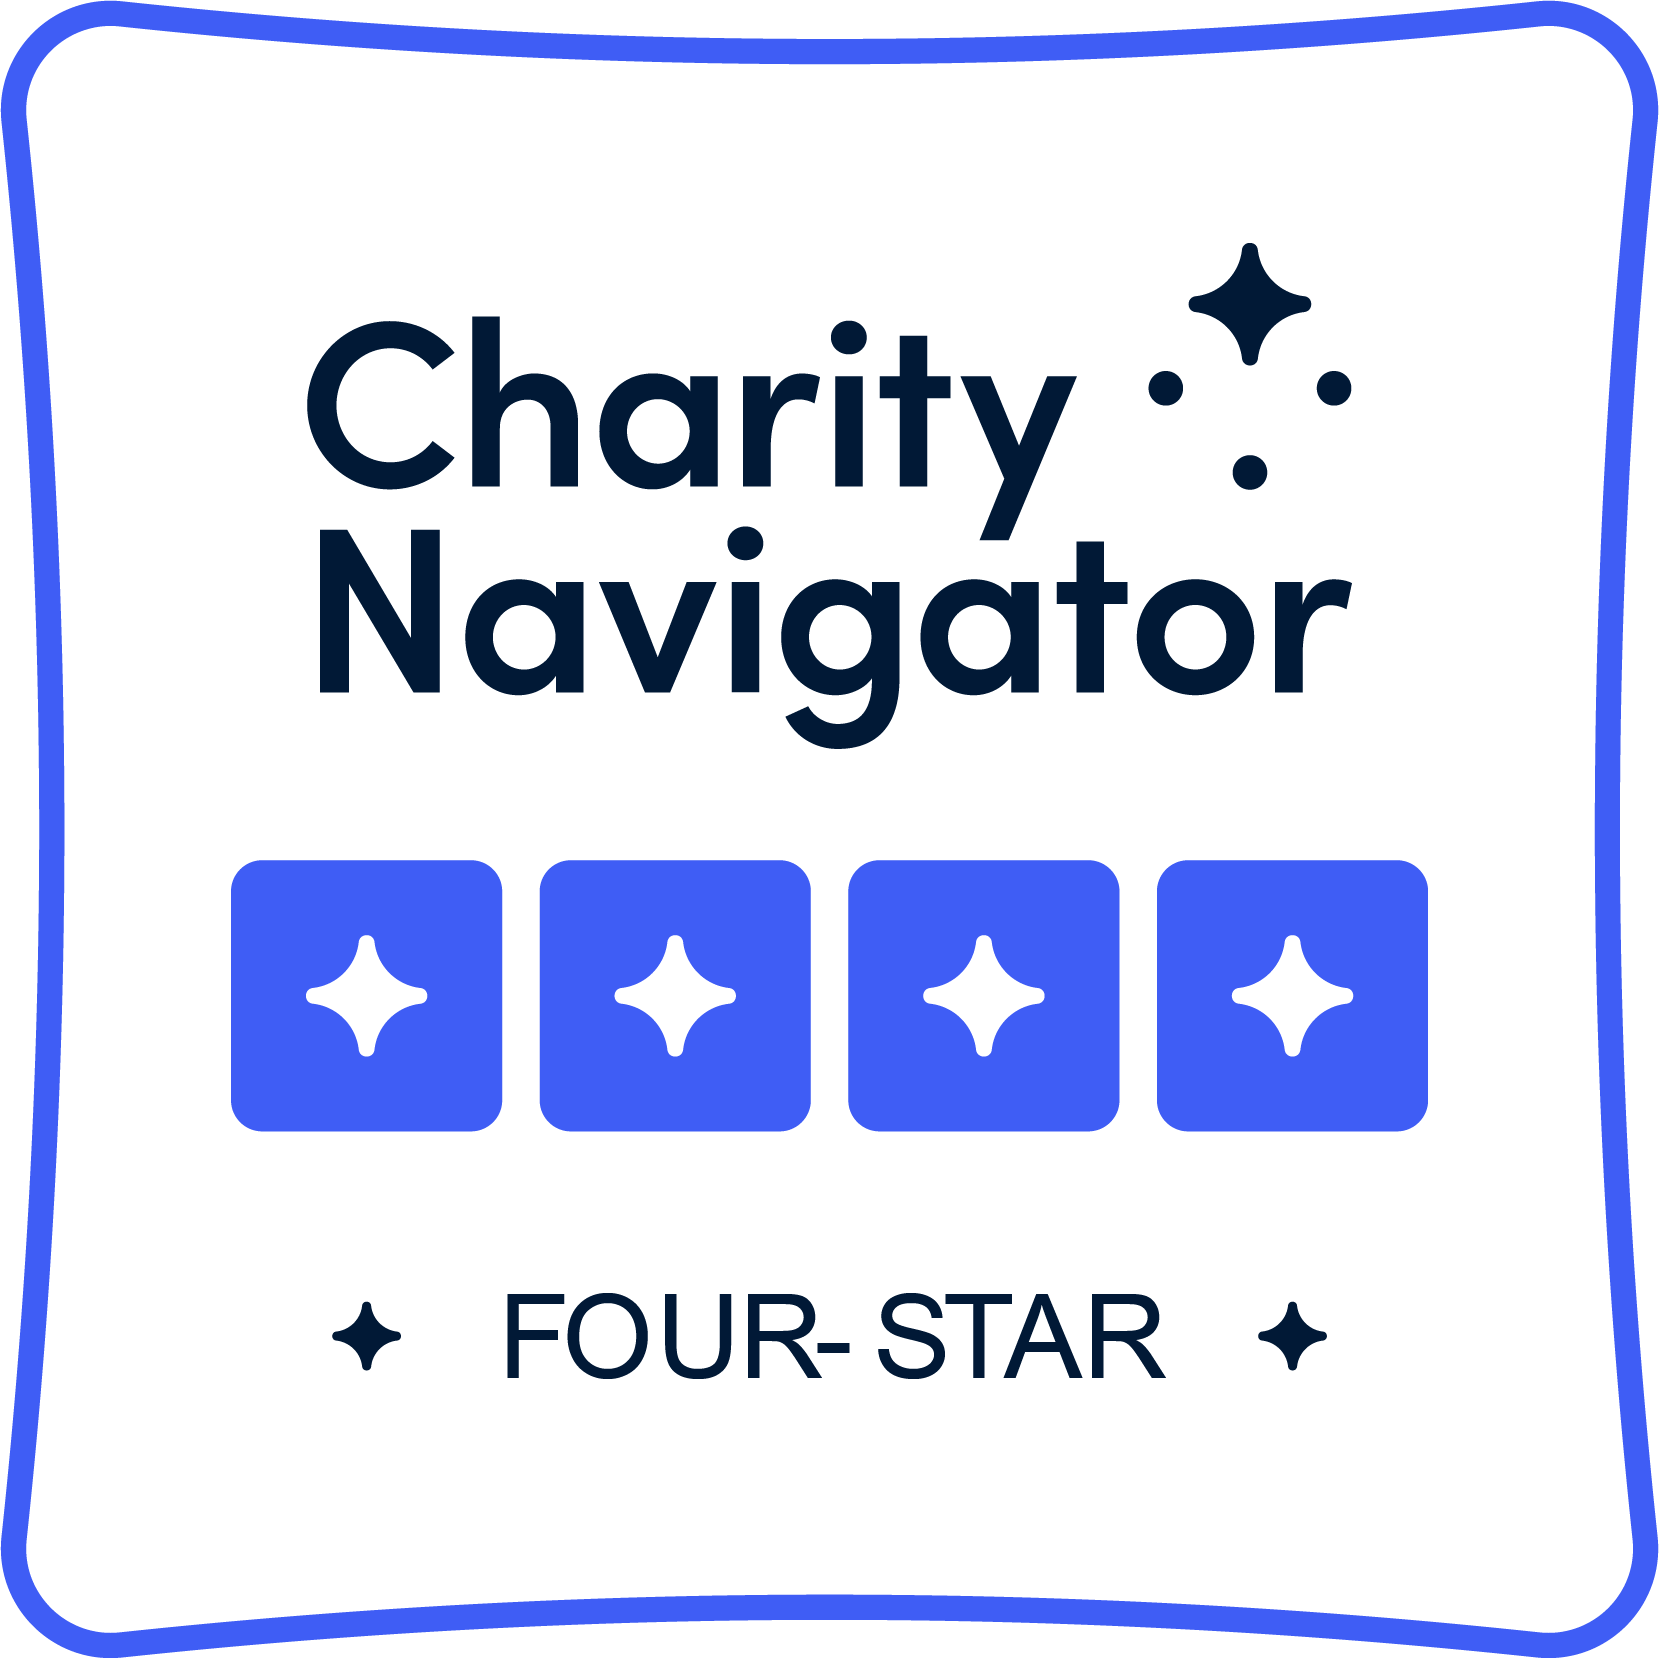 Charity navigator four stars